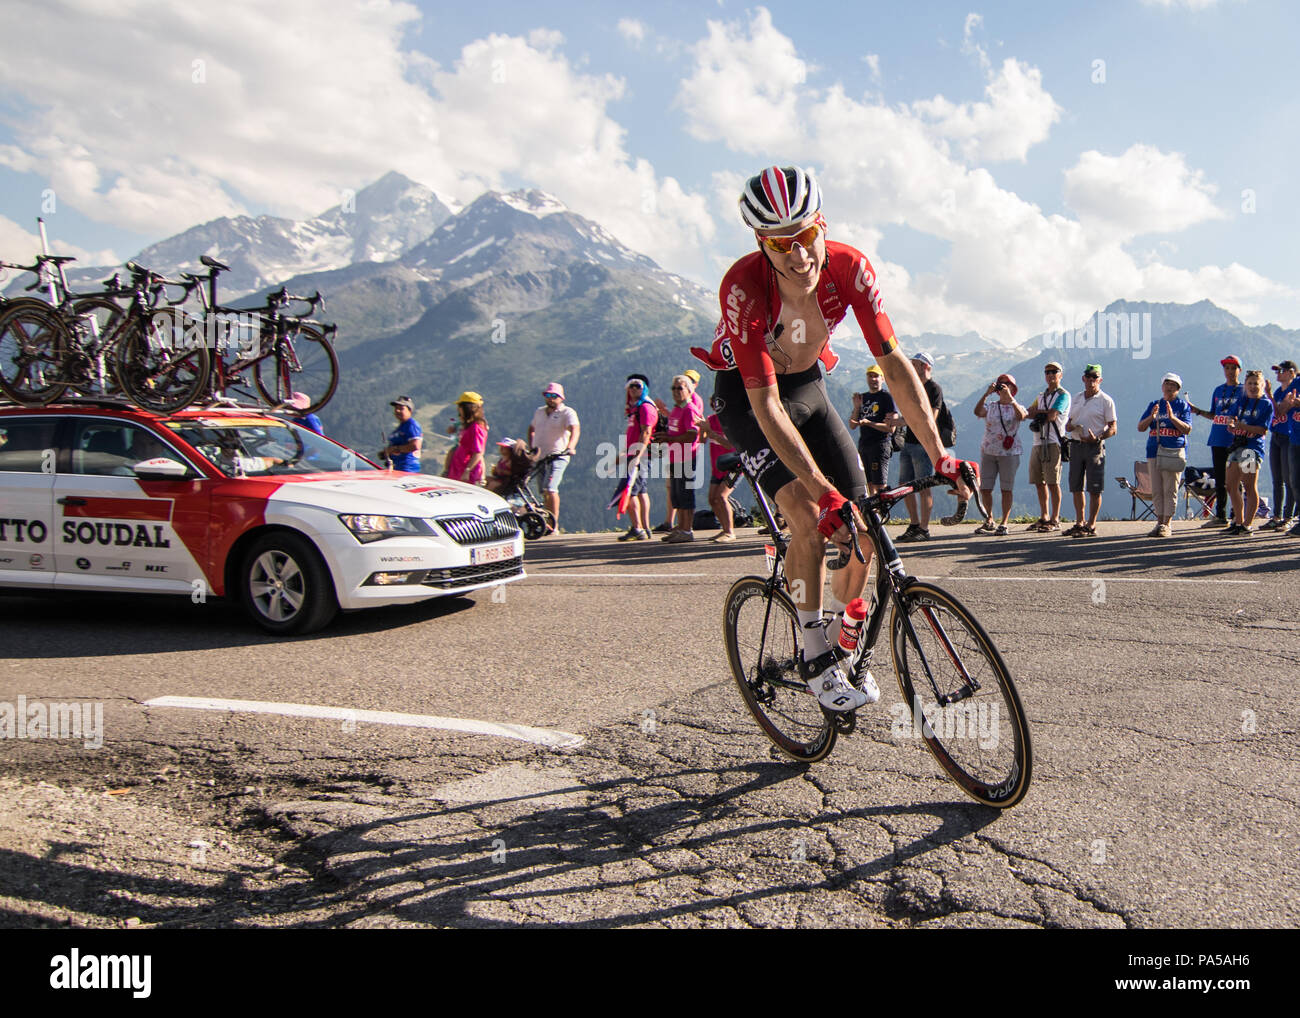 Marcel Sieberg Lotto Soudal Tour de France 2018 Radsport Stadium 11 La Rosiere Rhone Alpes Savoie Frankreich Stockfoto